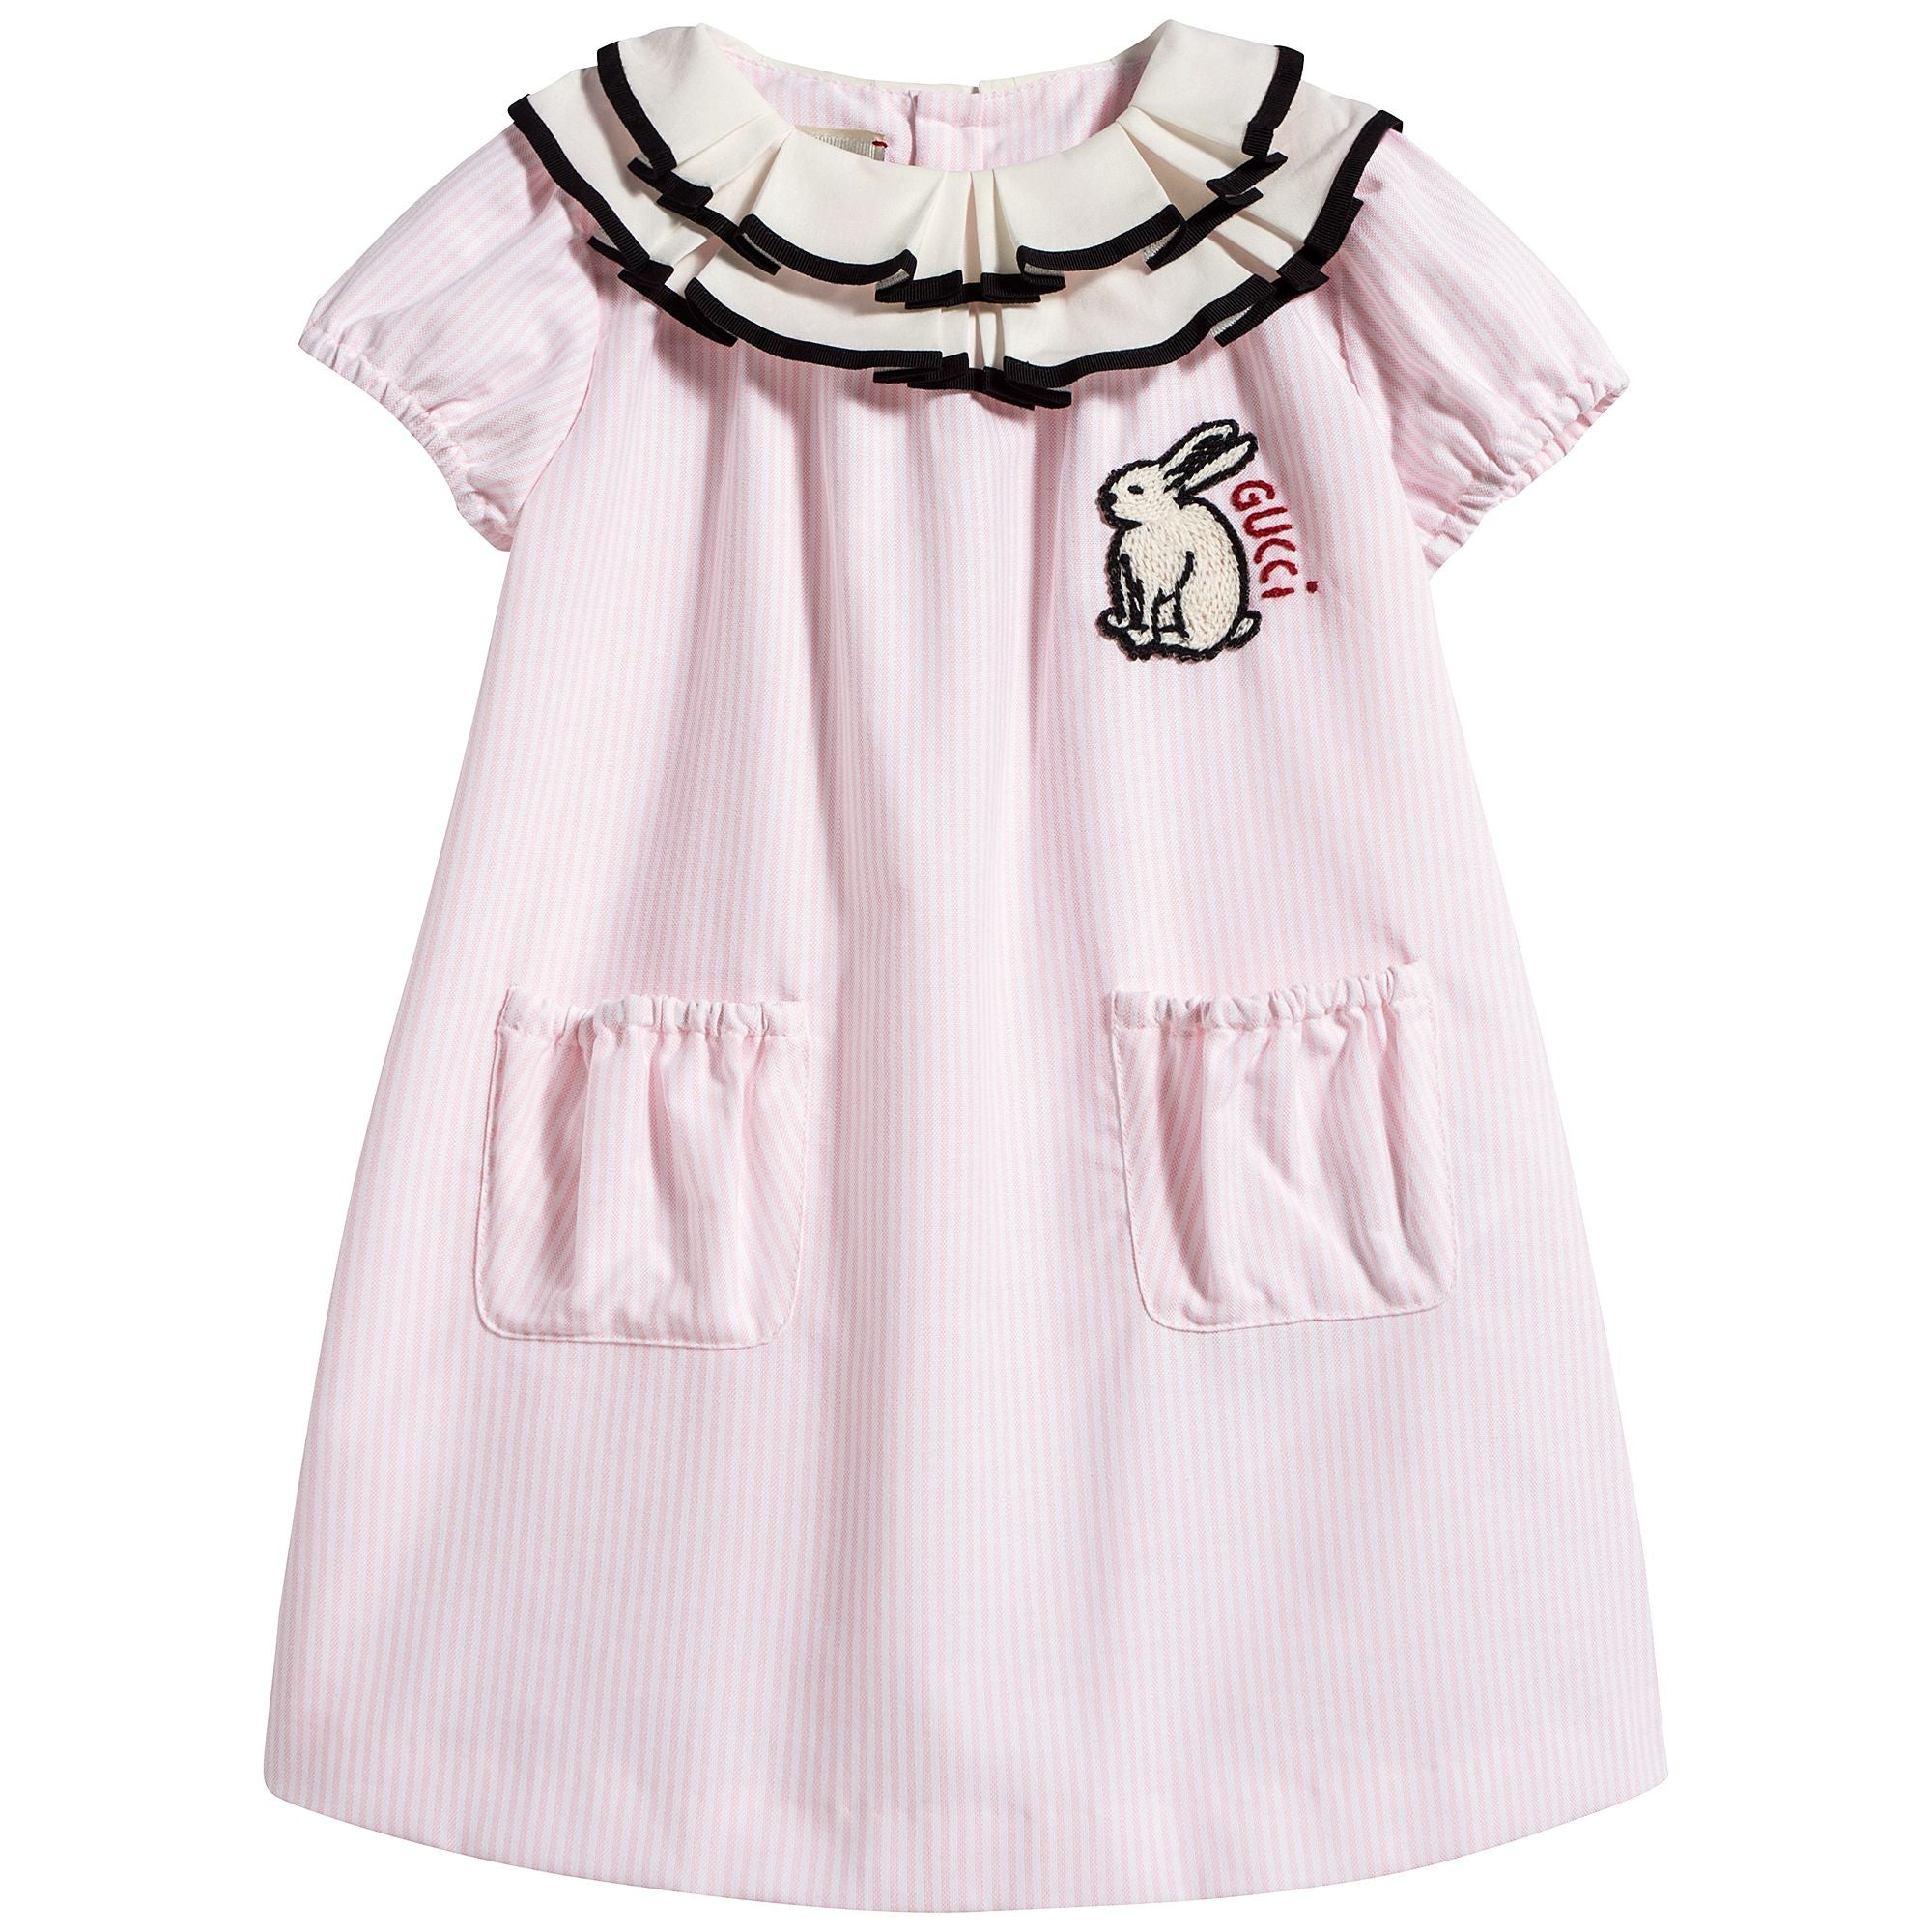 Baby Girls White & Light Pink Striped Dress